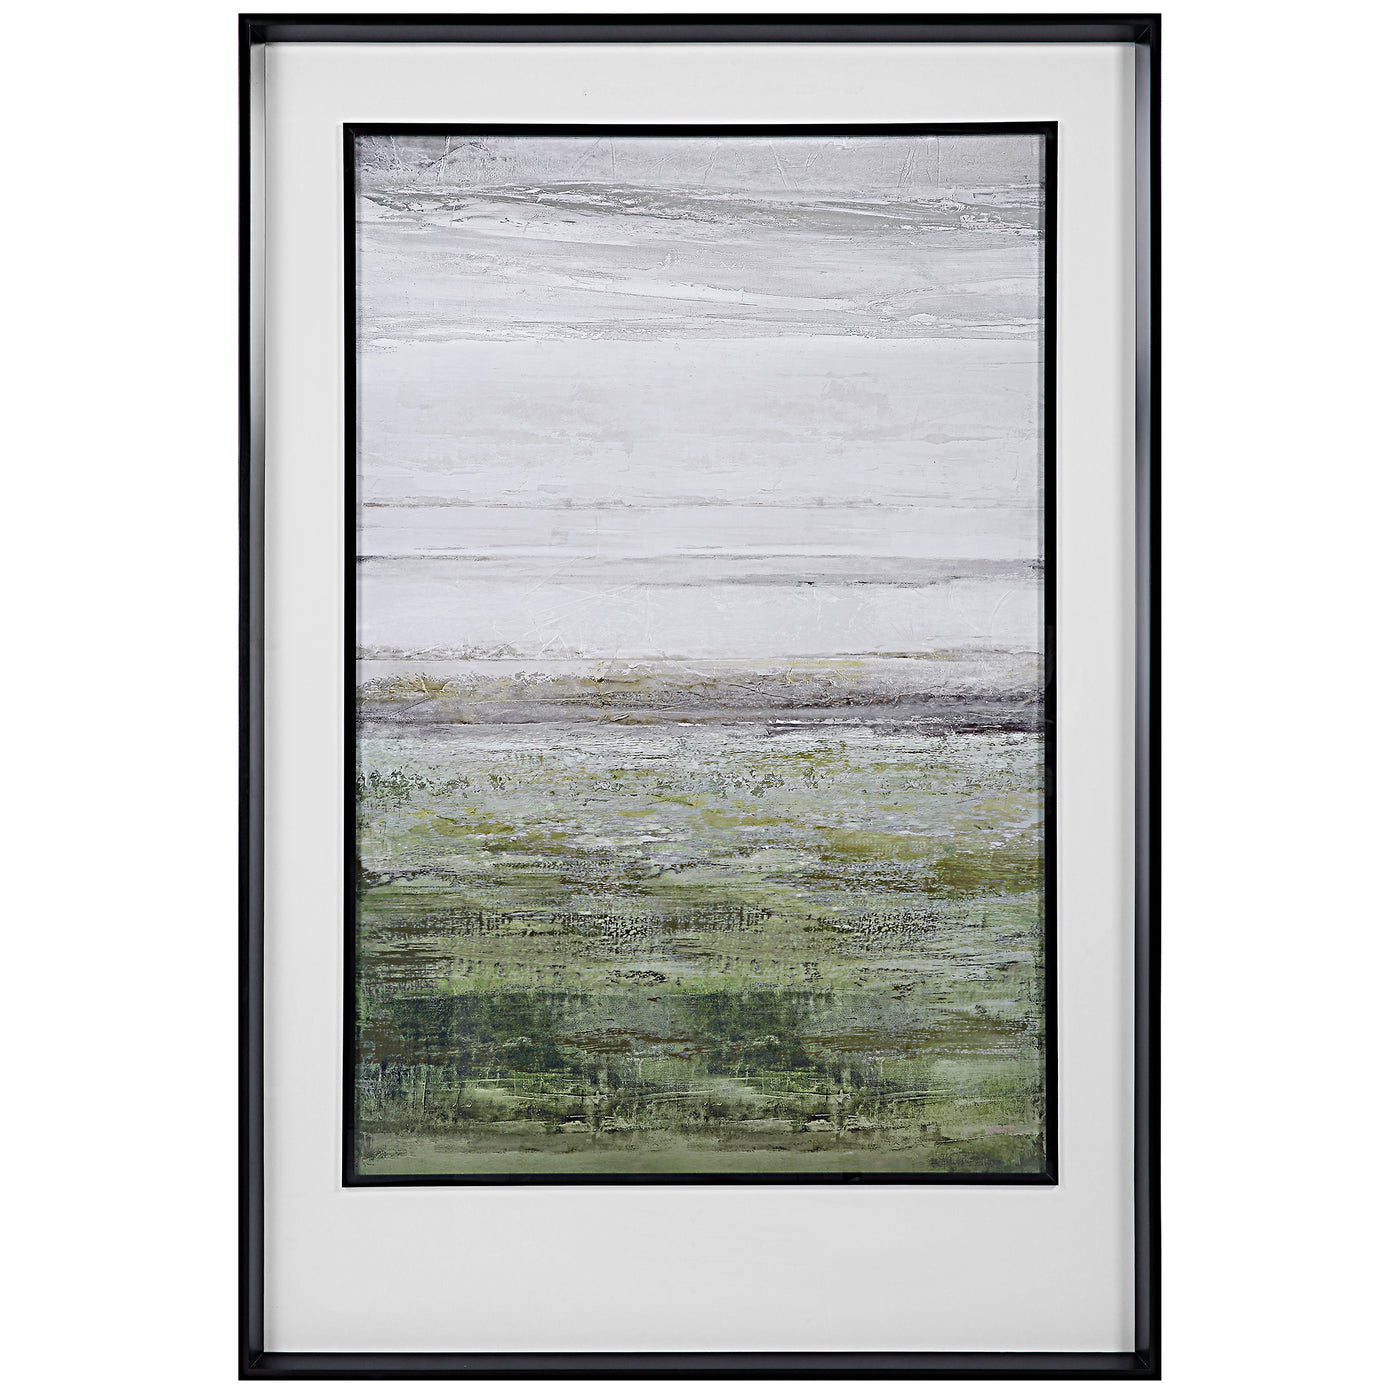 Uttermost Ocala Landscape Framed Print